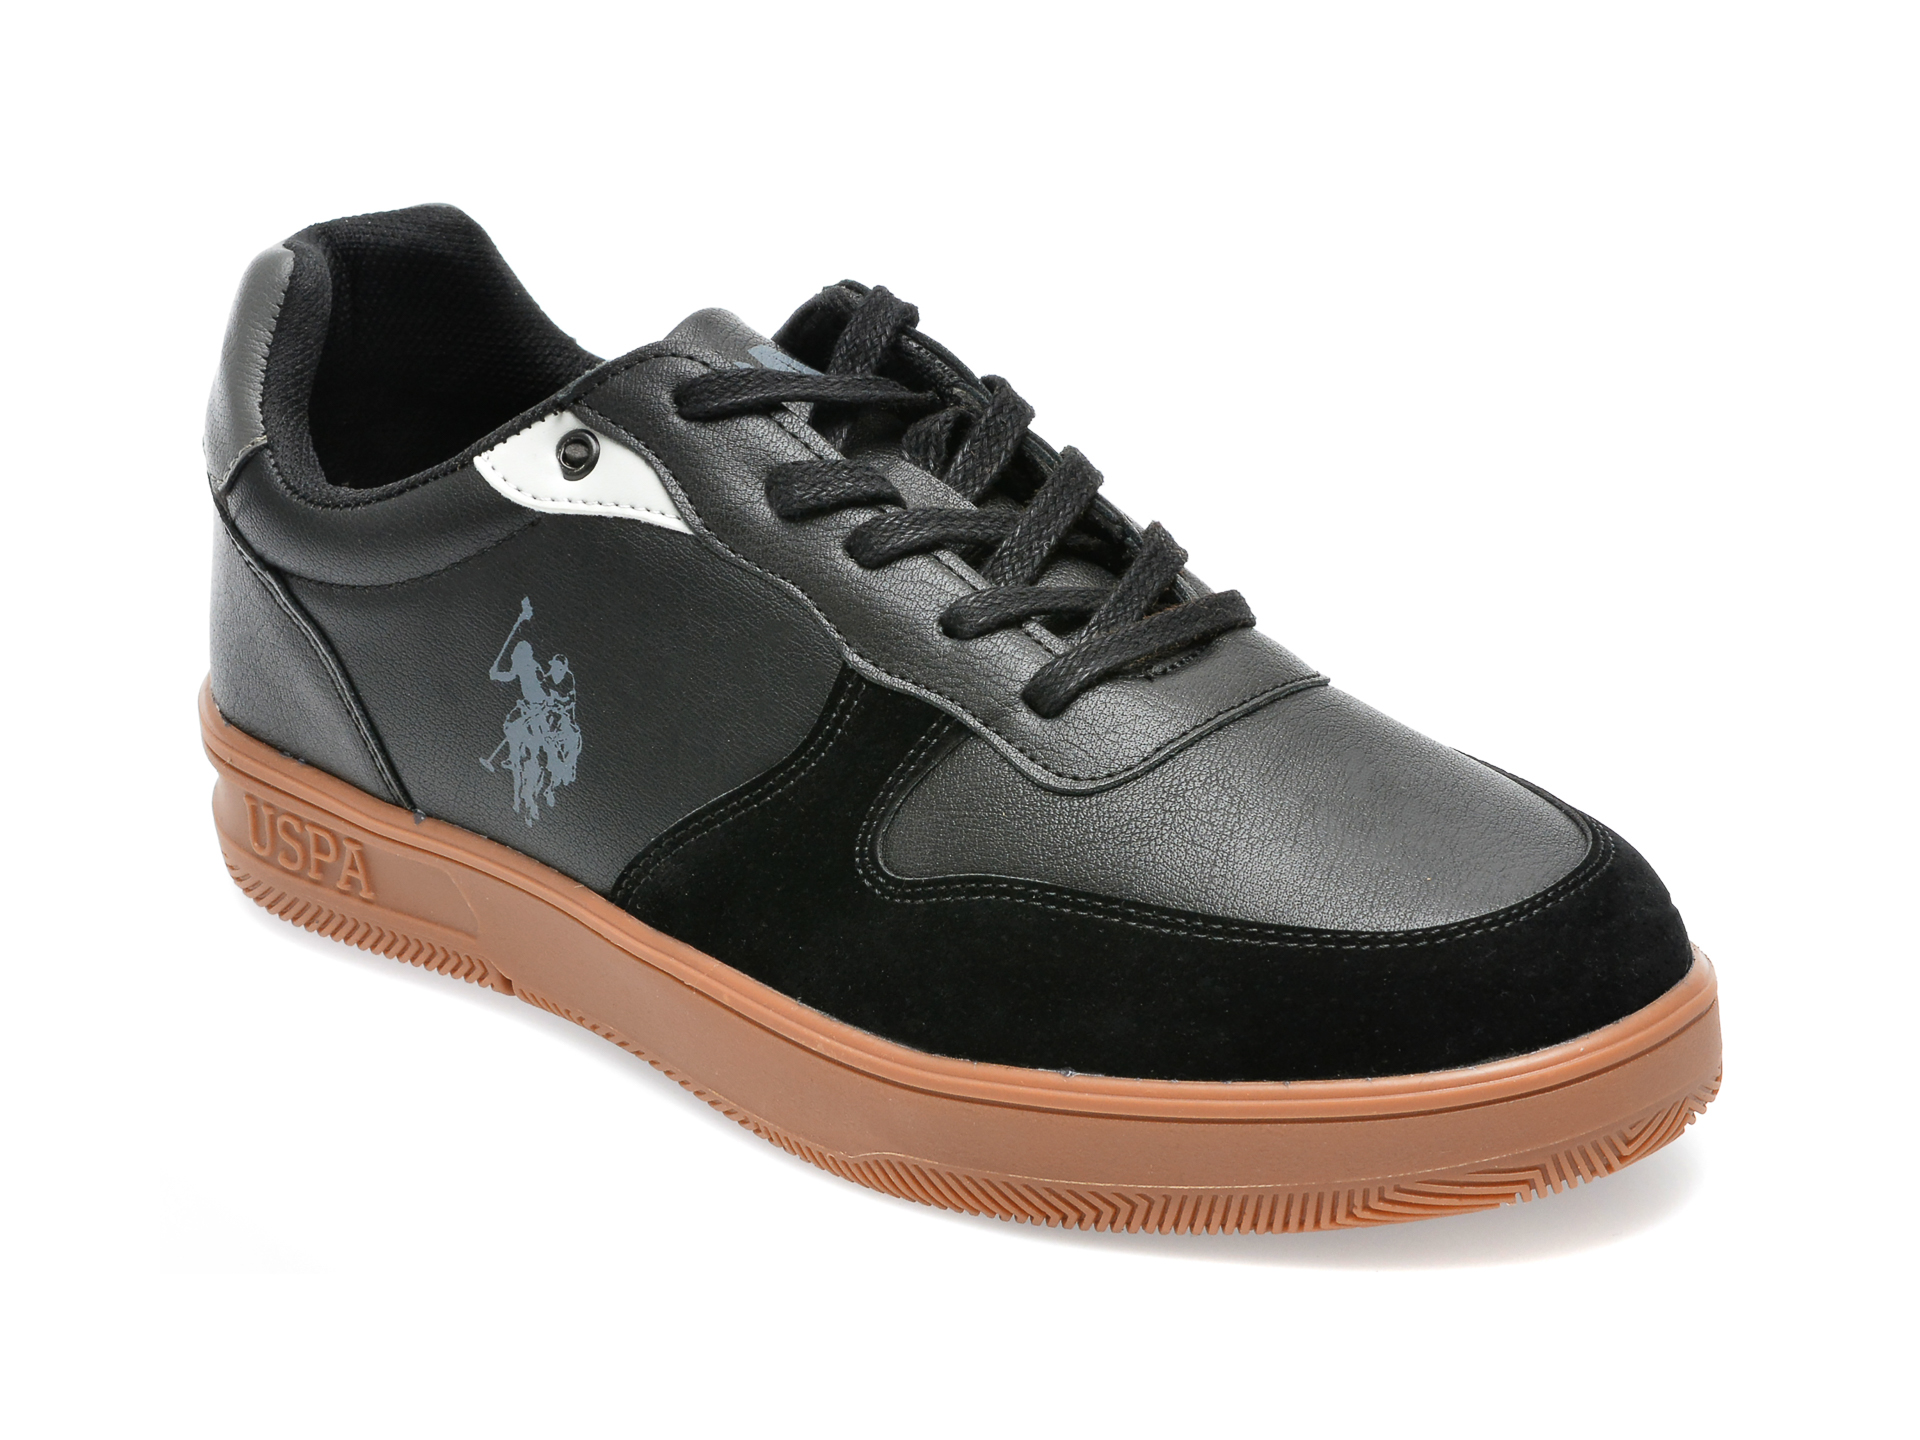 Pantofi sport US POLO ASSN negri, CORY2PR, din piele ecologica